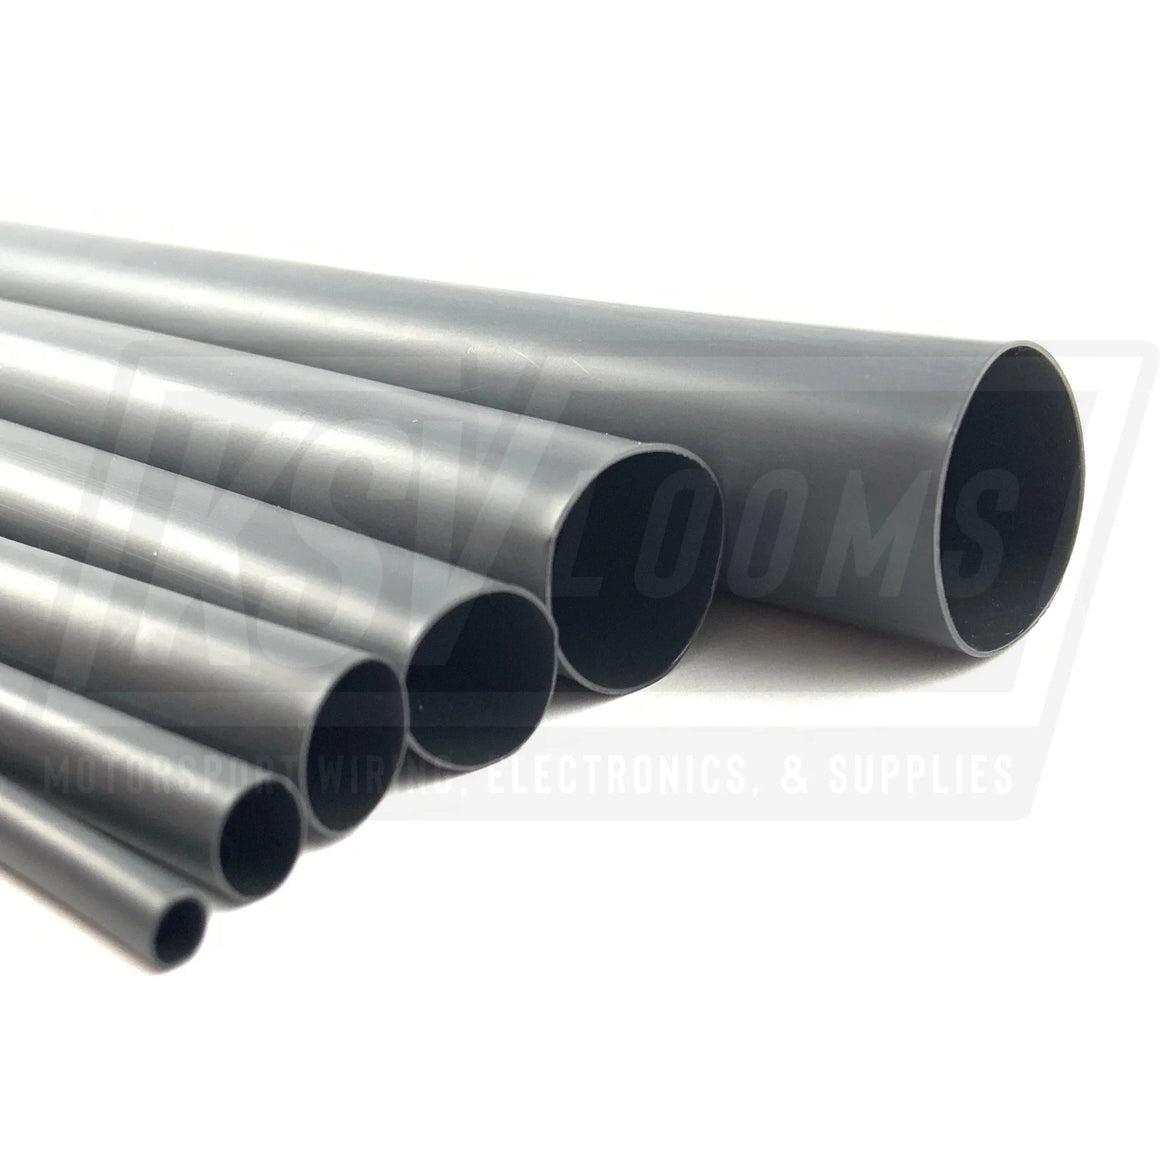 Raychem Atum Heat Shrink Adhesive Lined Tubing (1’ Length) 1 1/4’